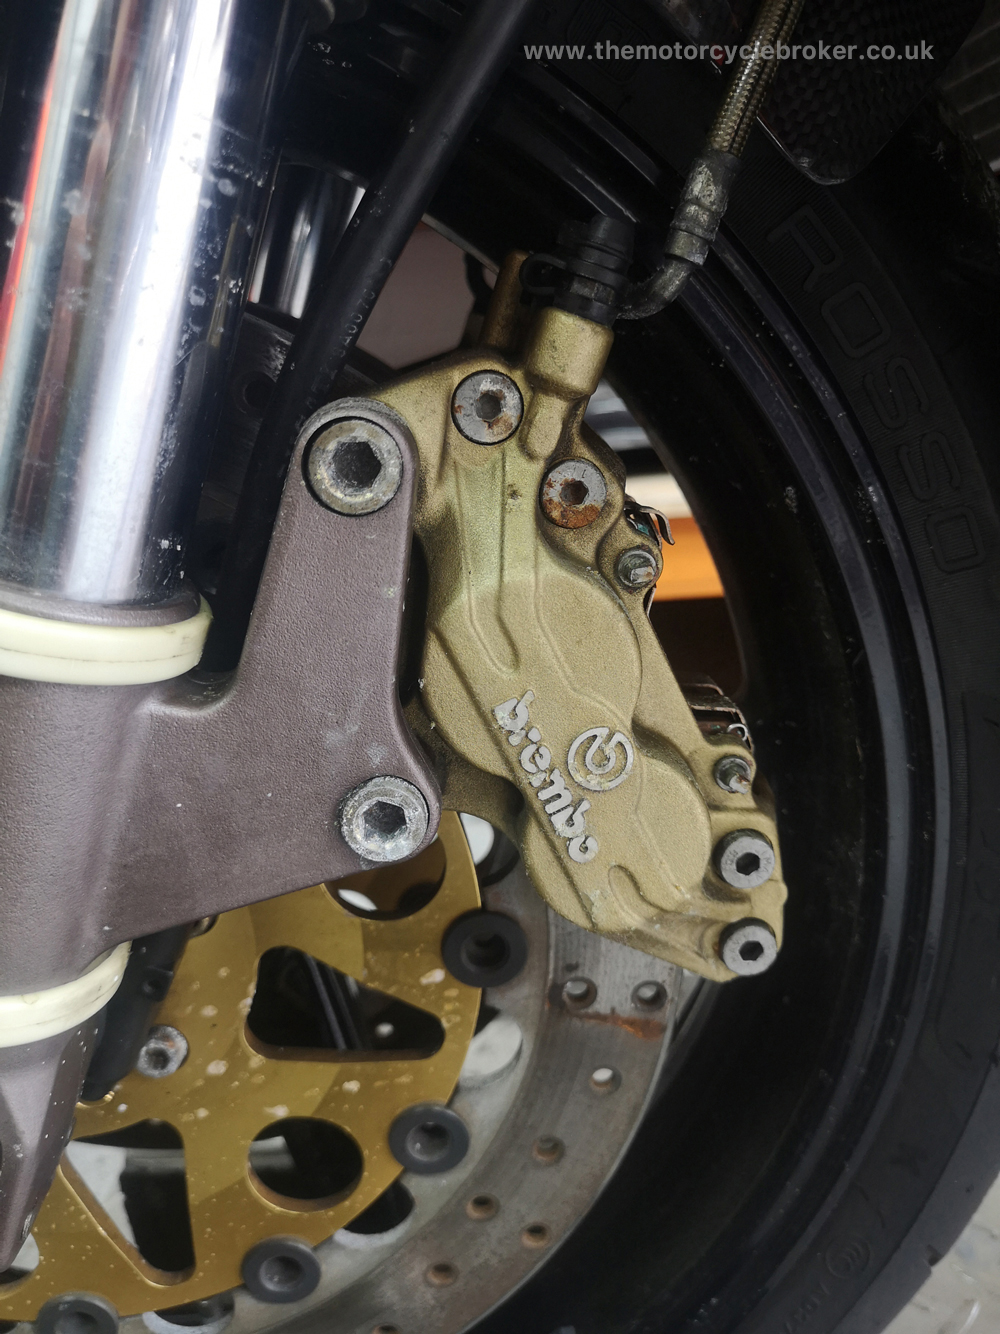 Front brake corrosion